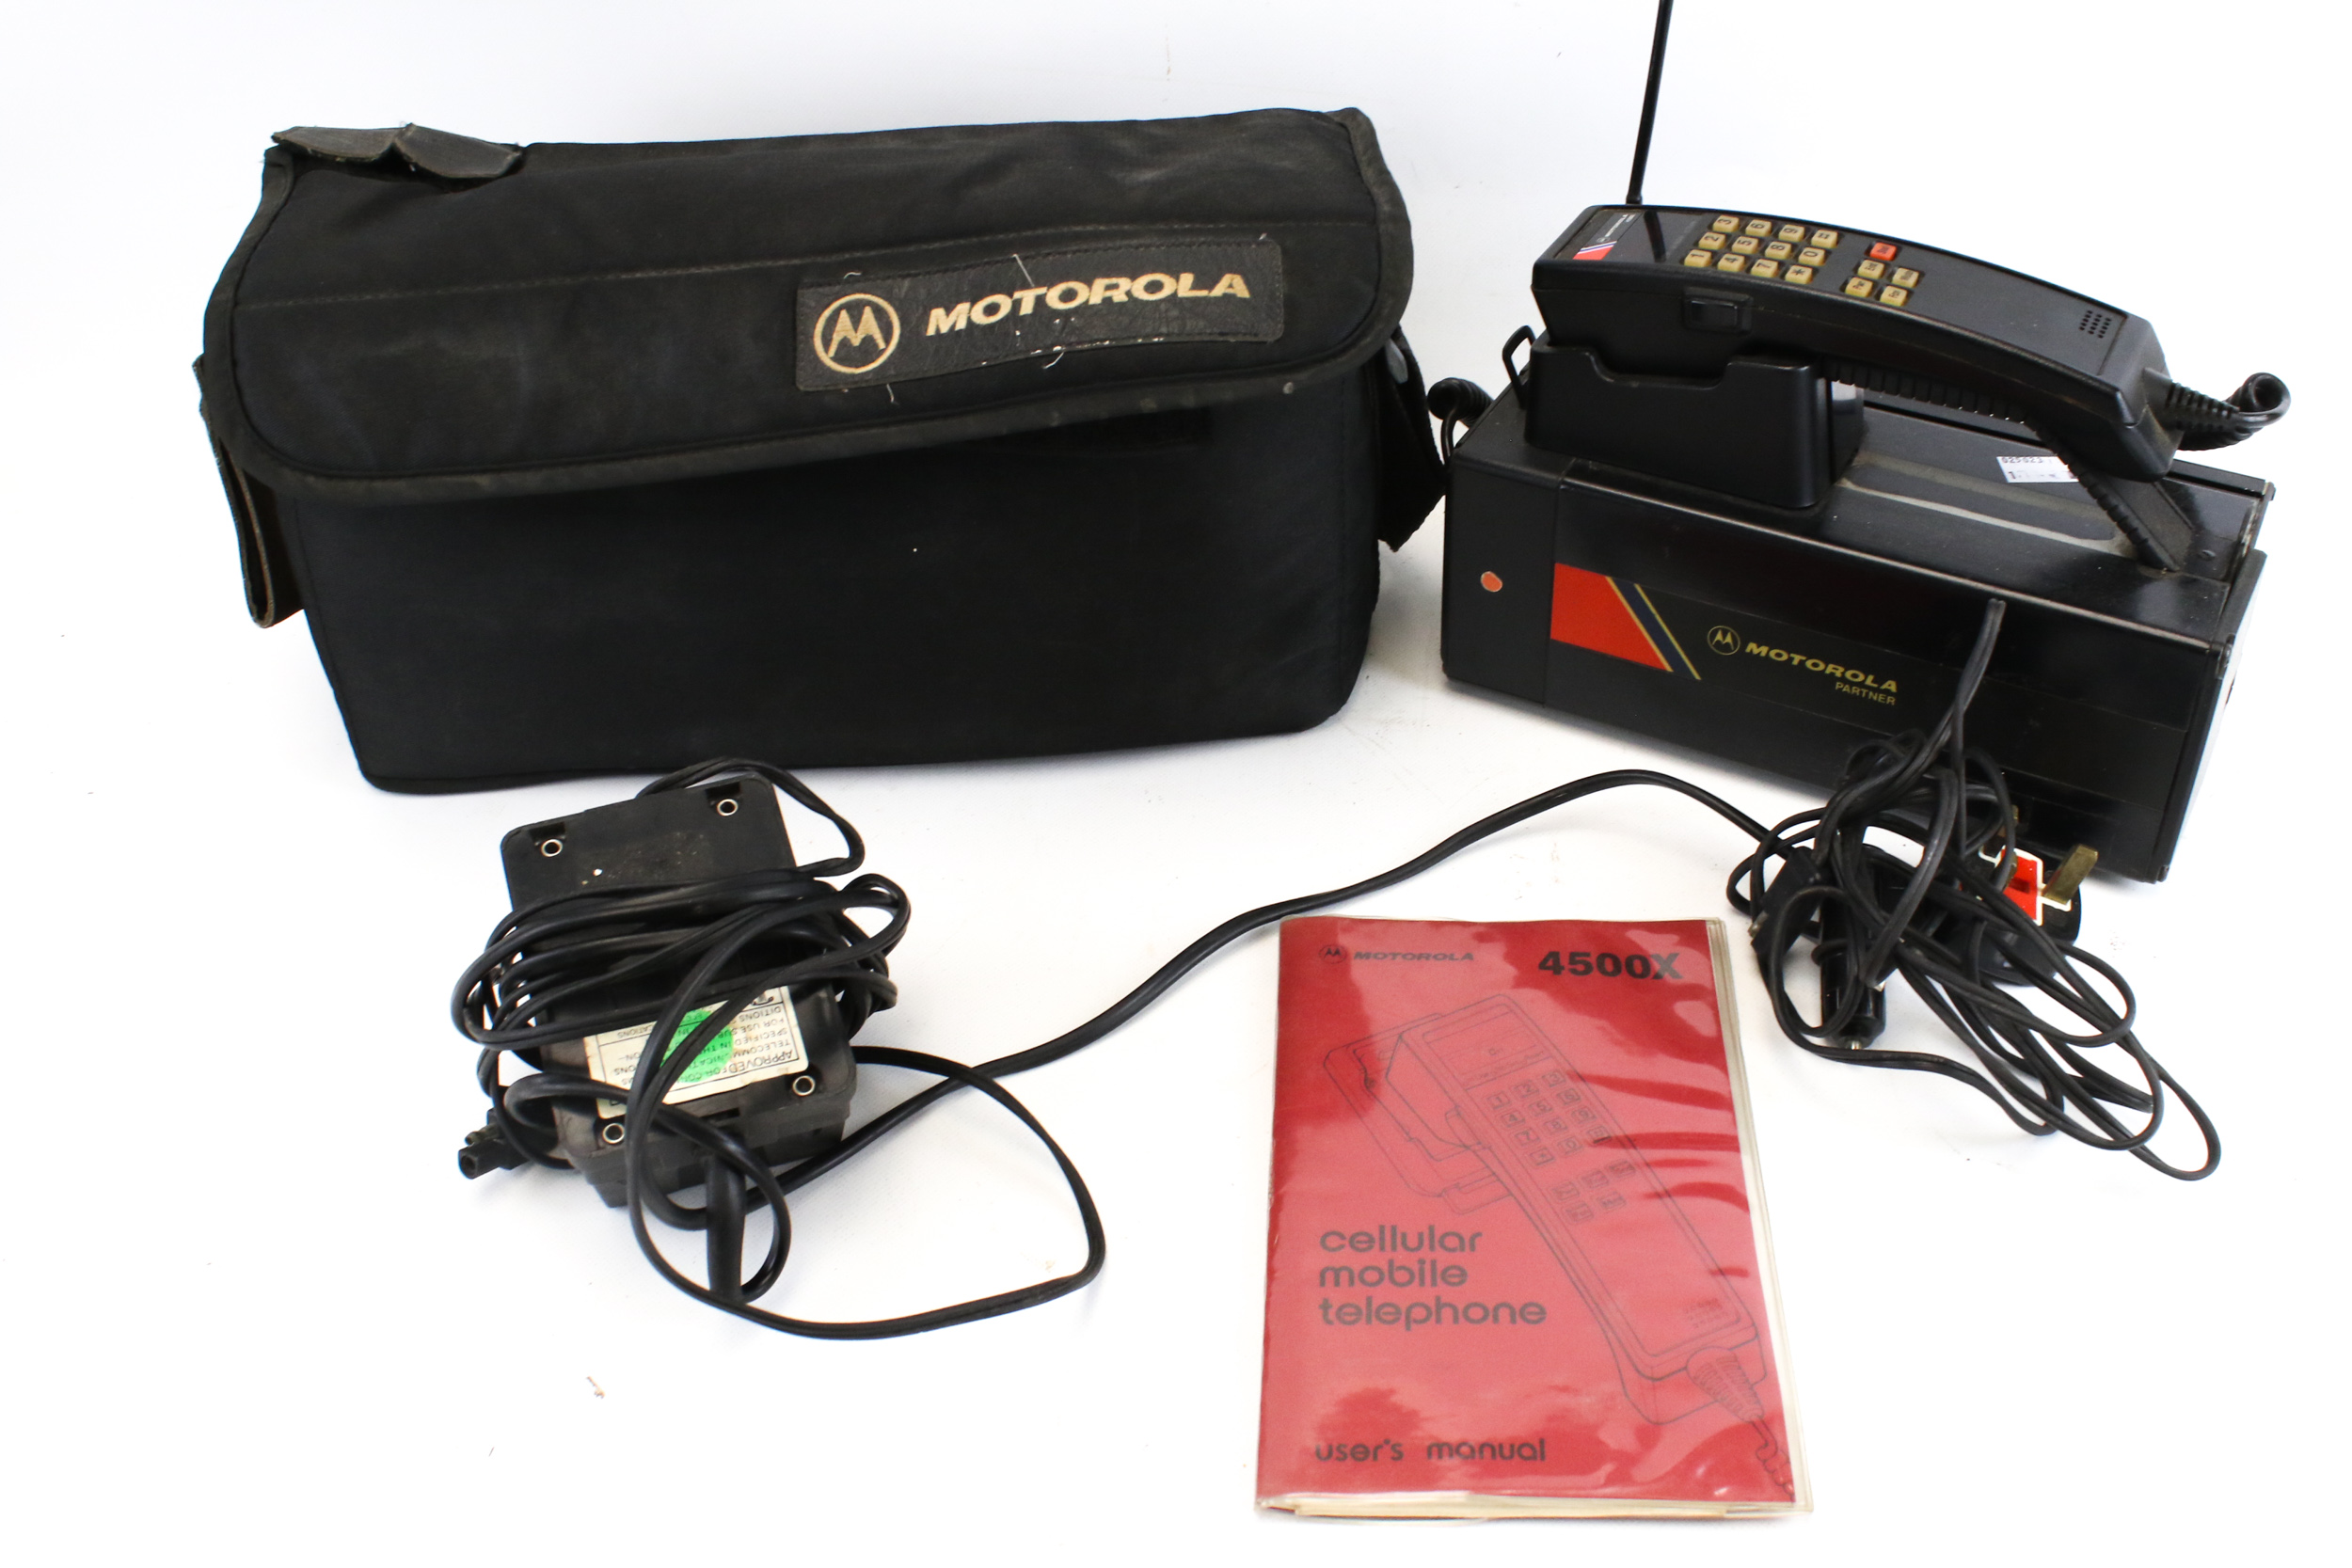 A vintage Motorola Partner 4500X mobile cellular telephone and case.